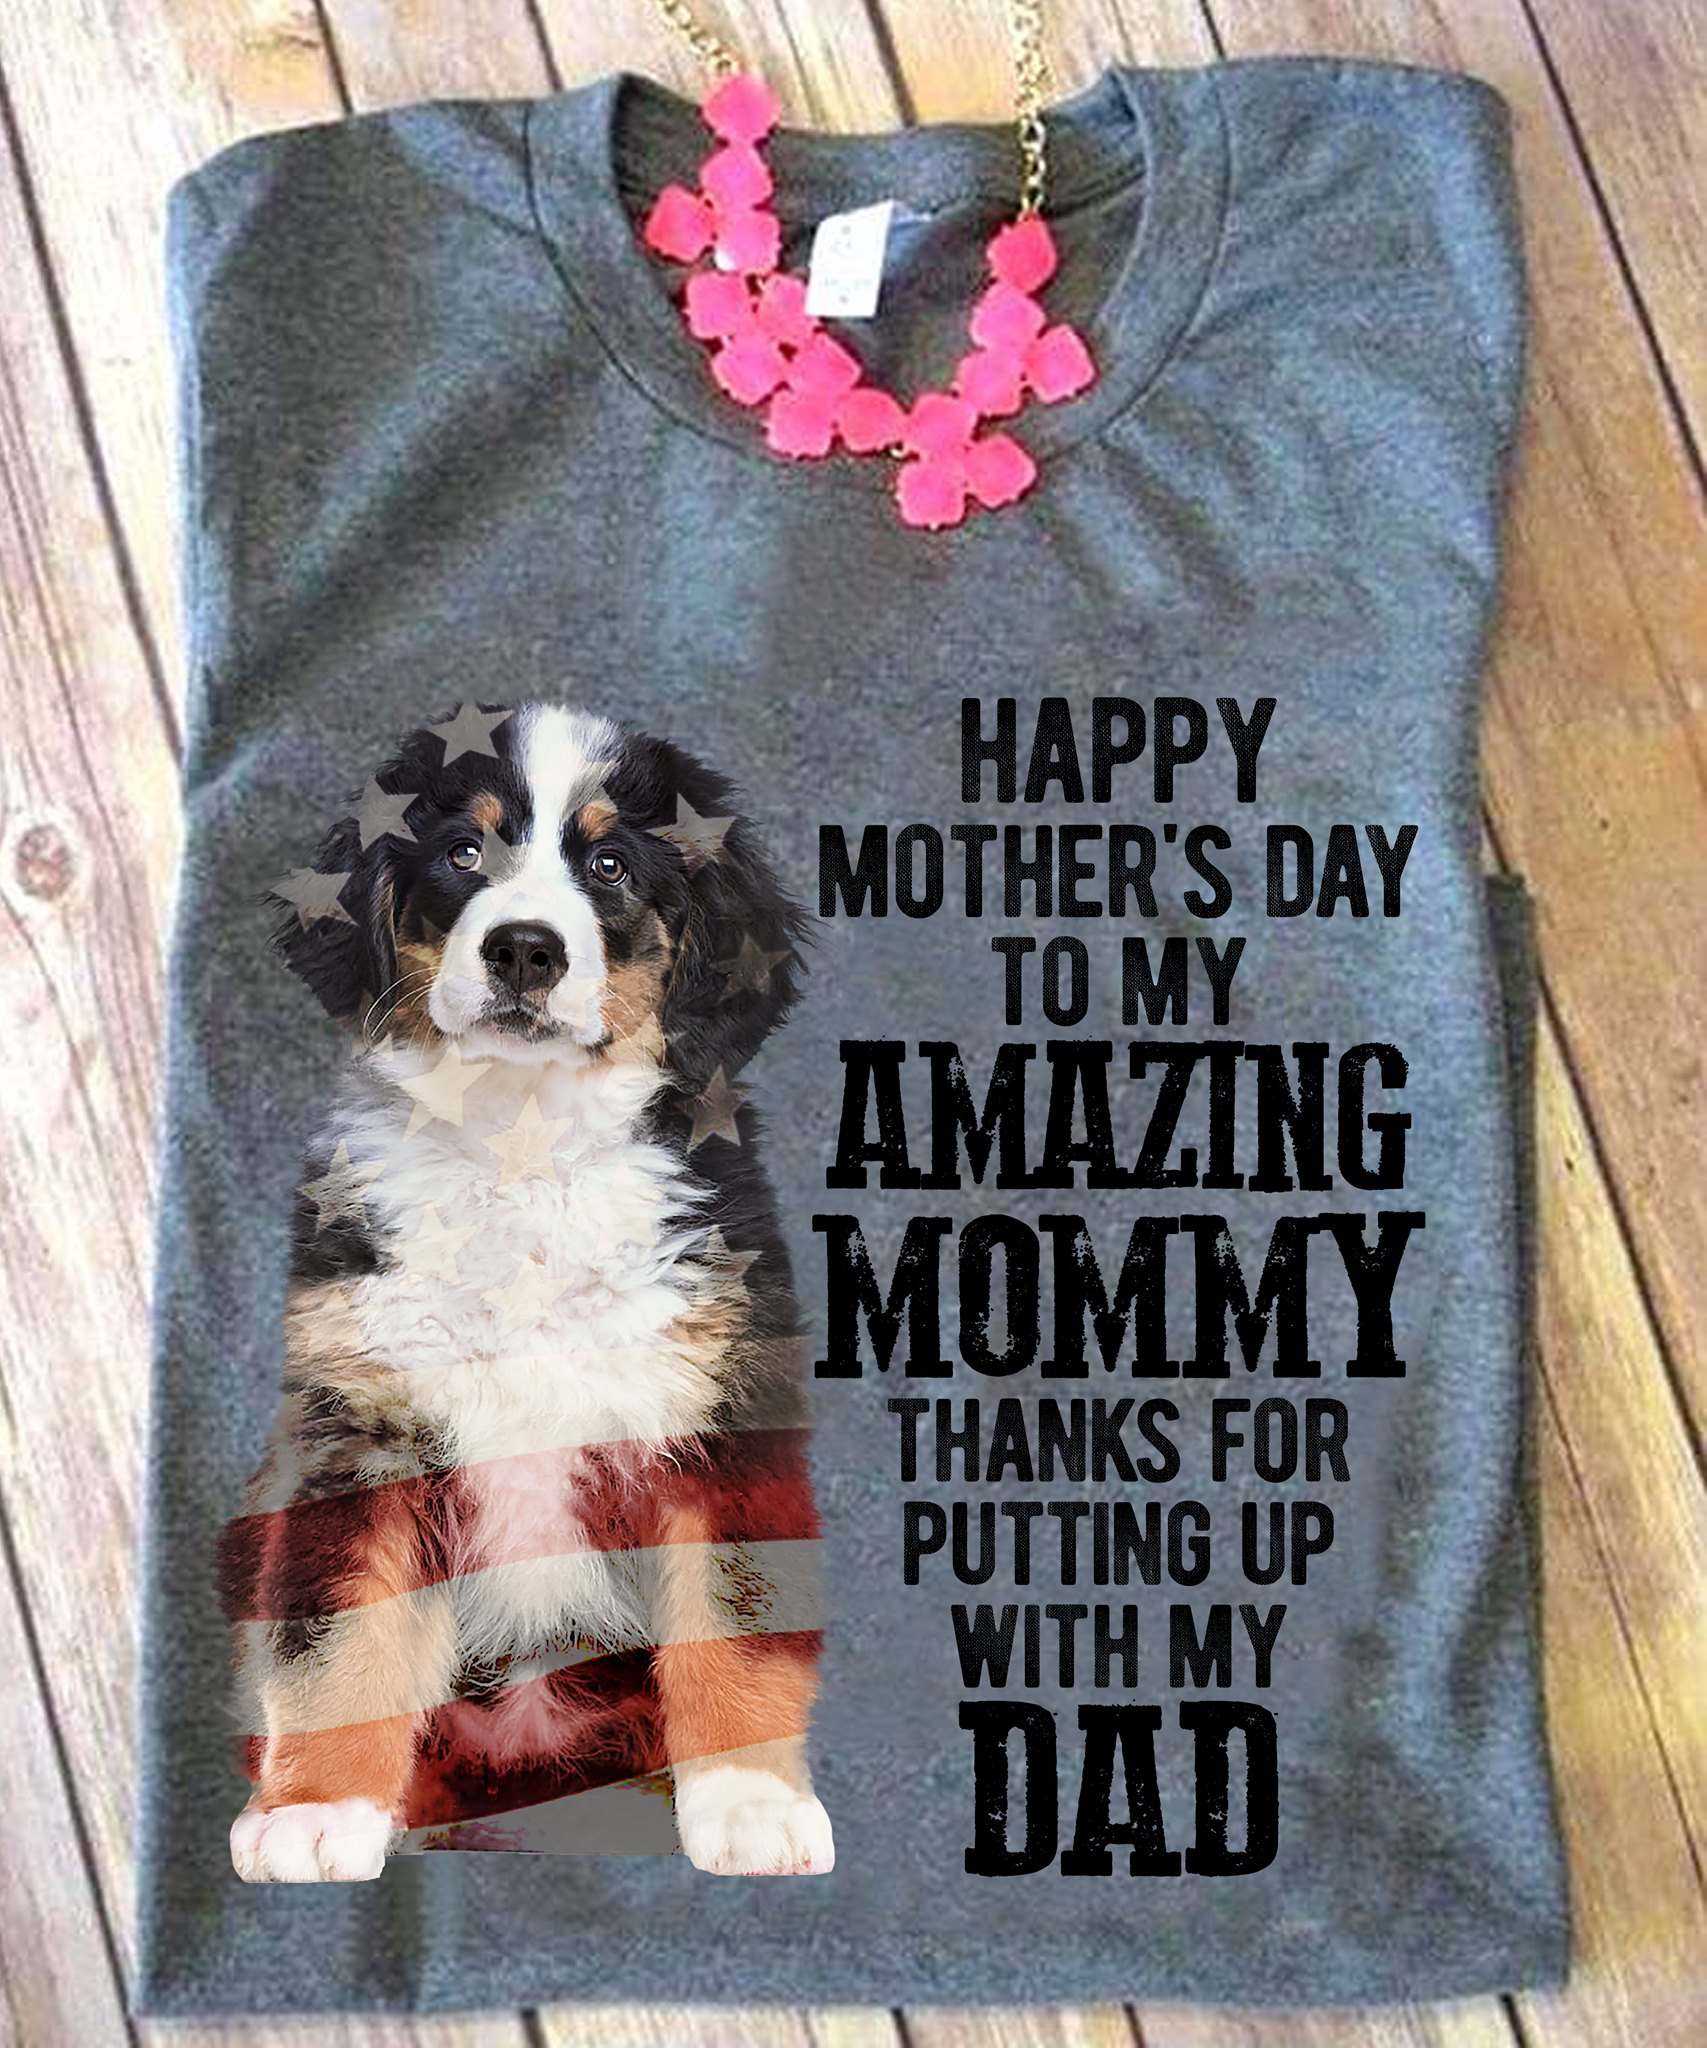 The Worlds Greatest Dog Mama Crewneck Sweatshirt for Dogmom Mother